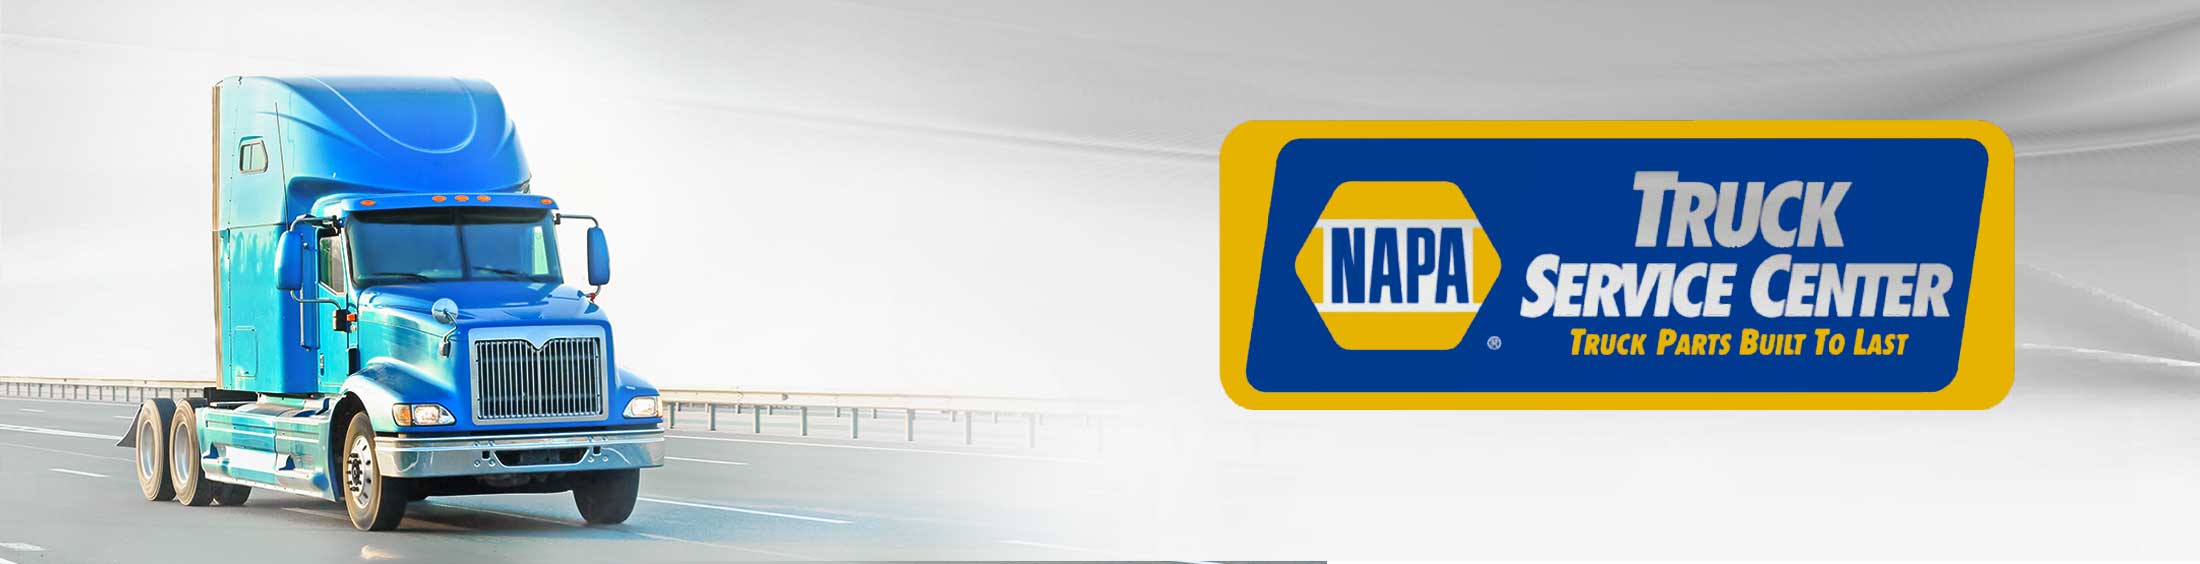 NAPA Truck Service Center Banner